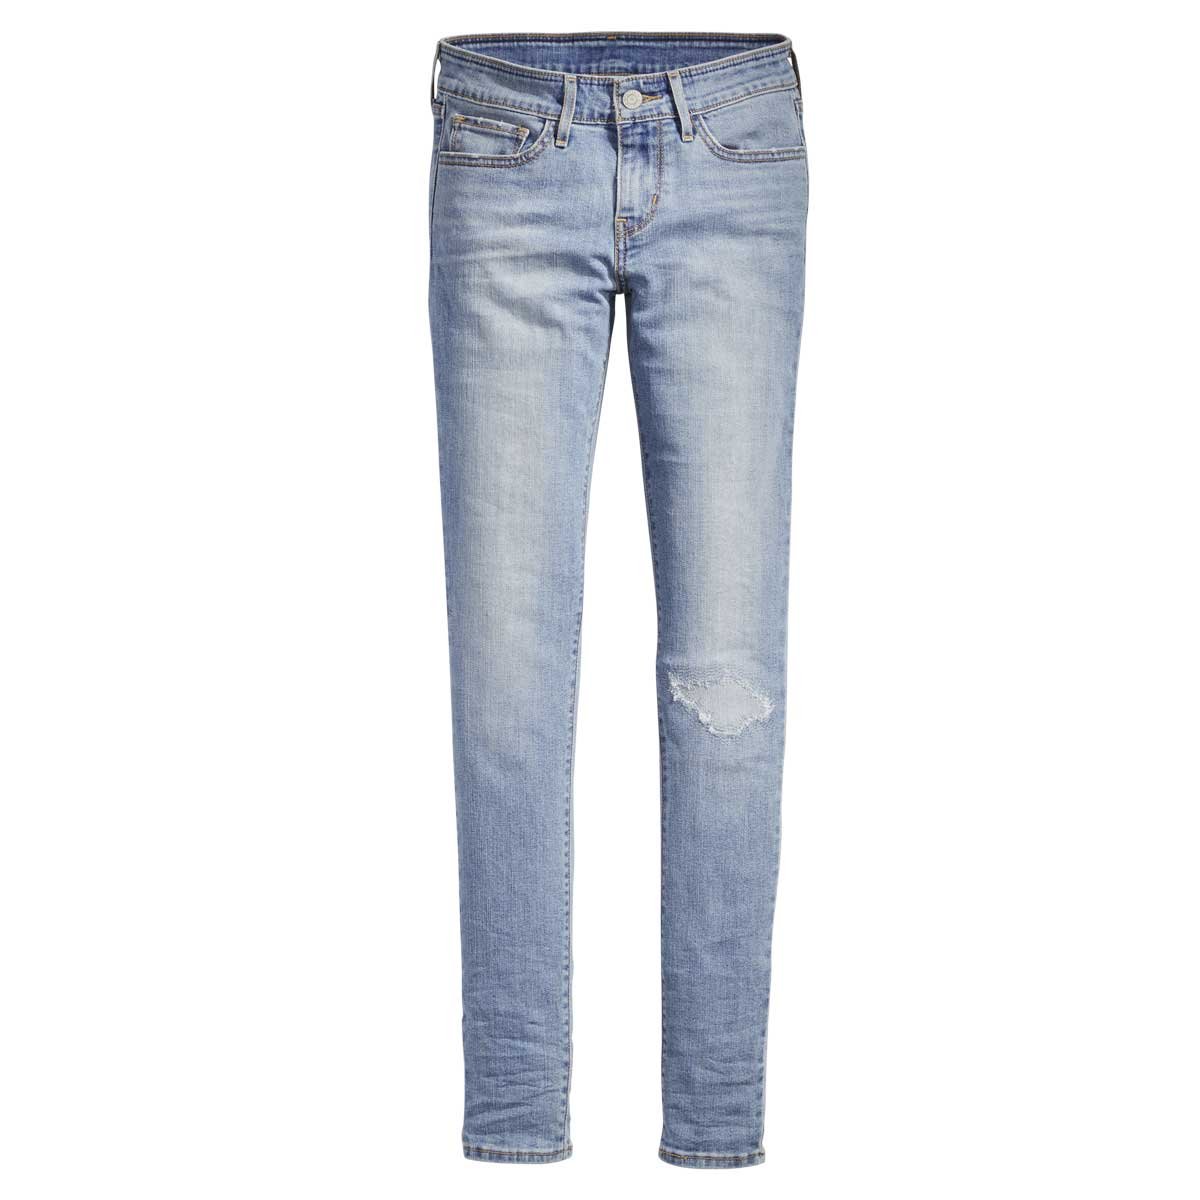 Jeans Levis Woman, Corte Skinny